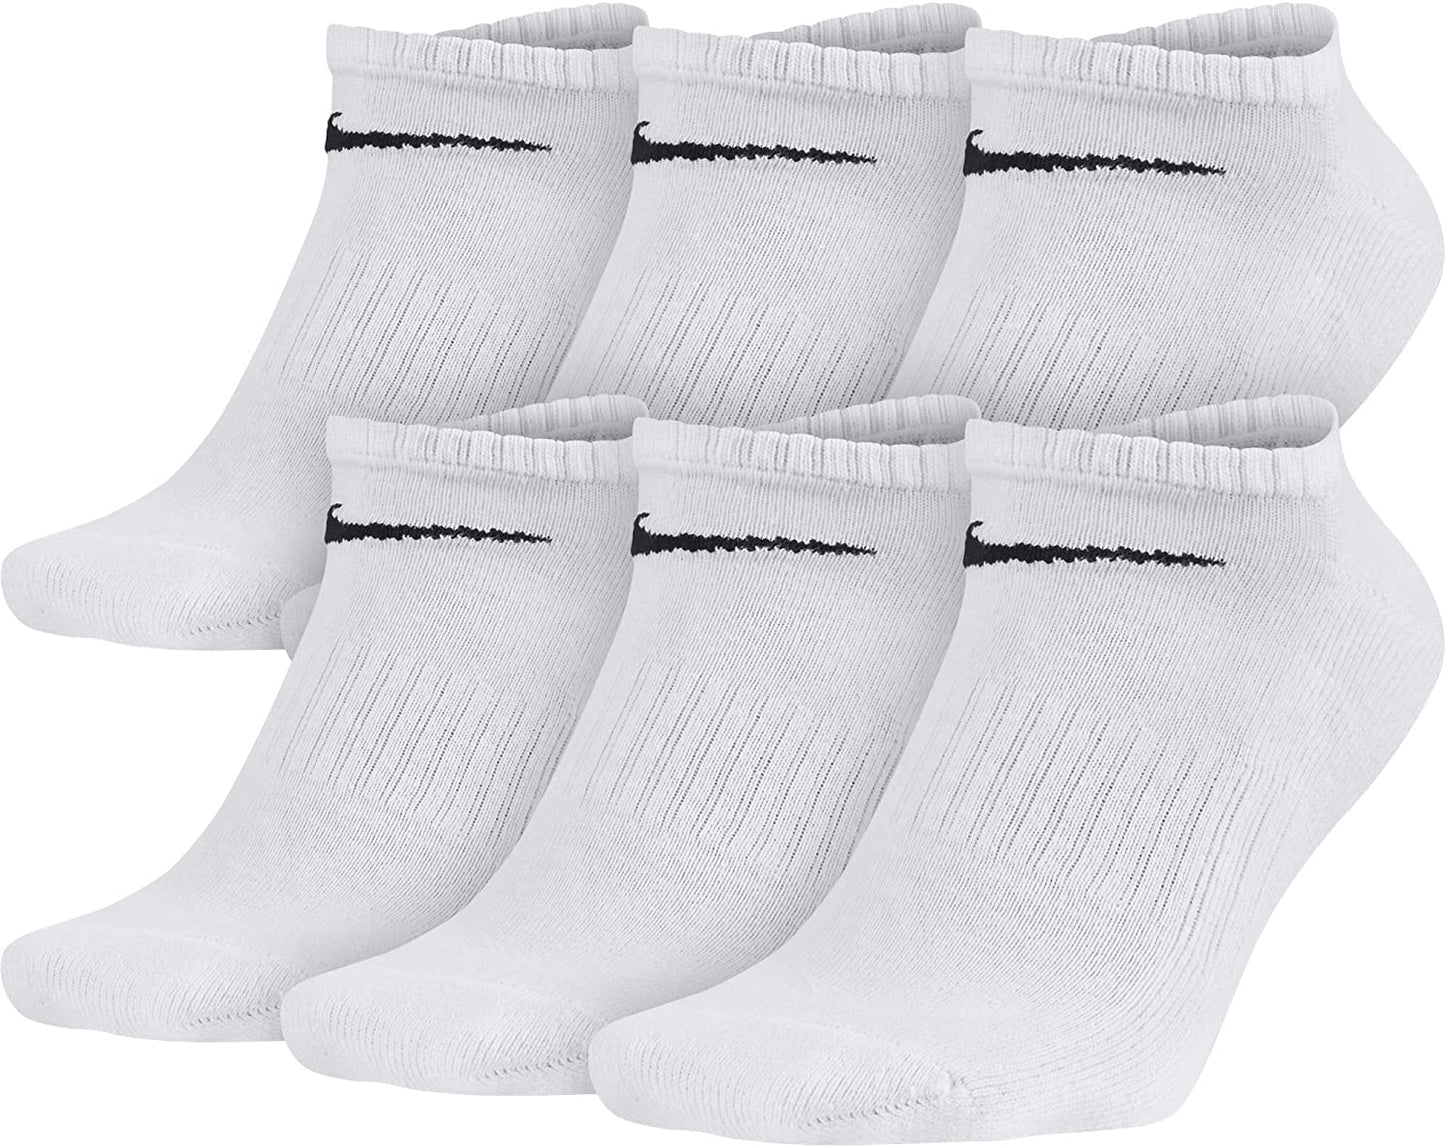 Nike Performance Cushion No-Show White/Black Socks with Band (6 Pairs)